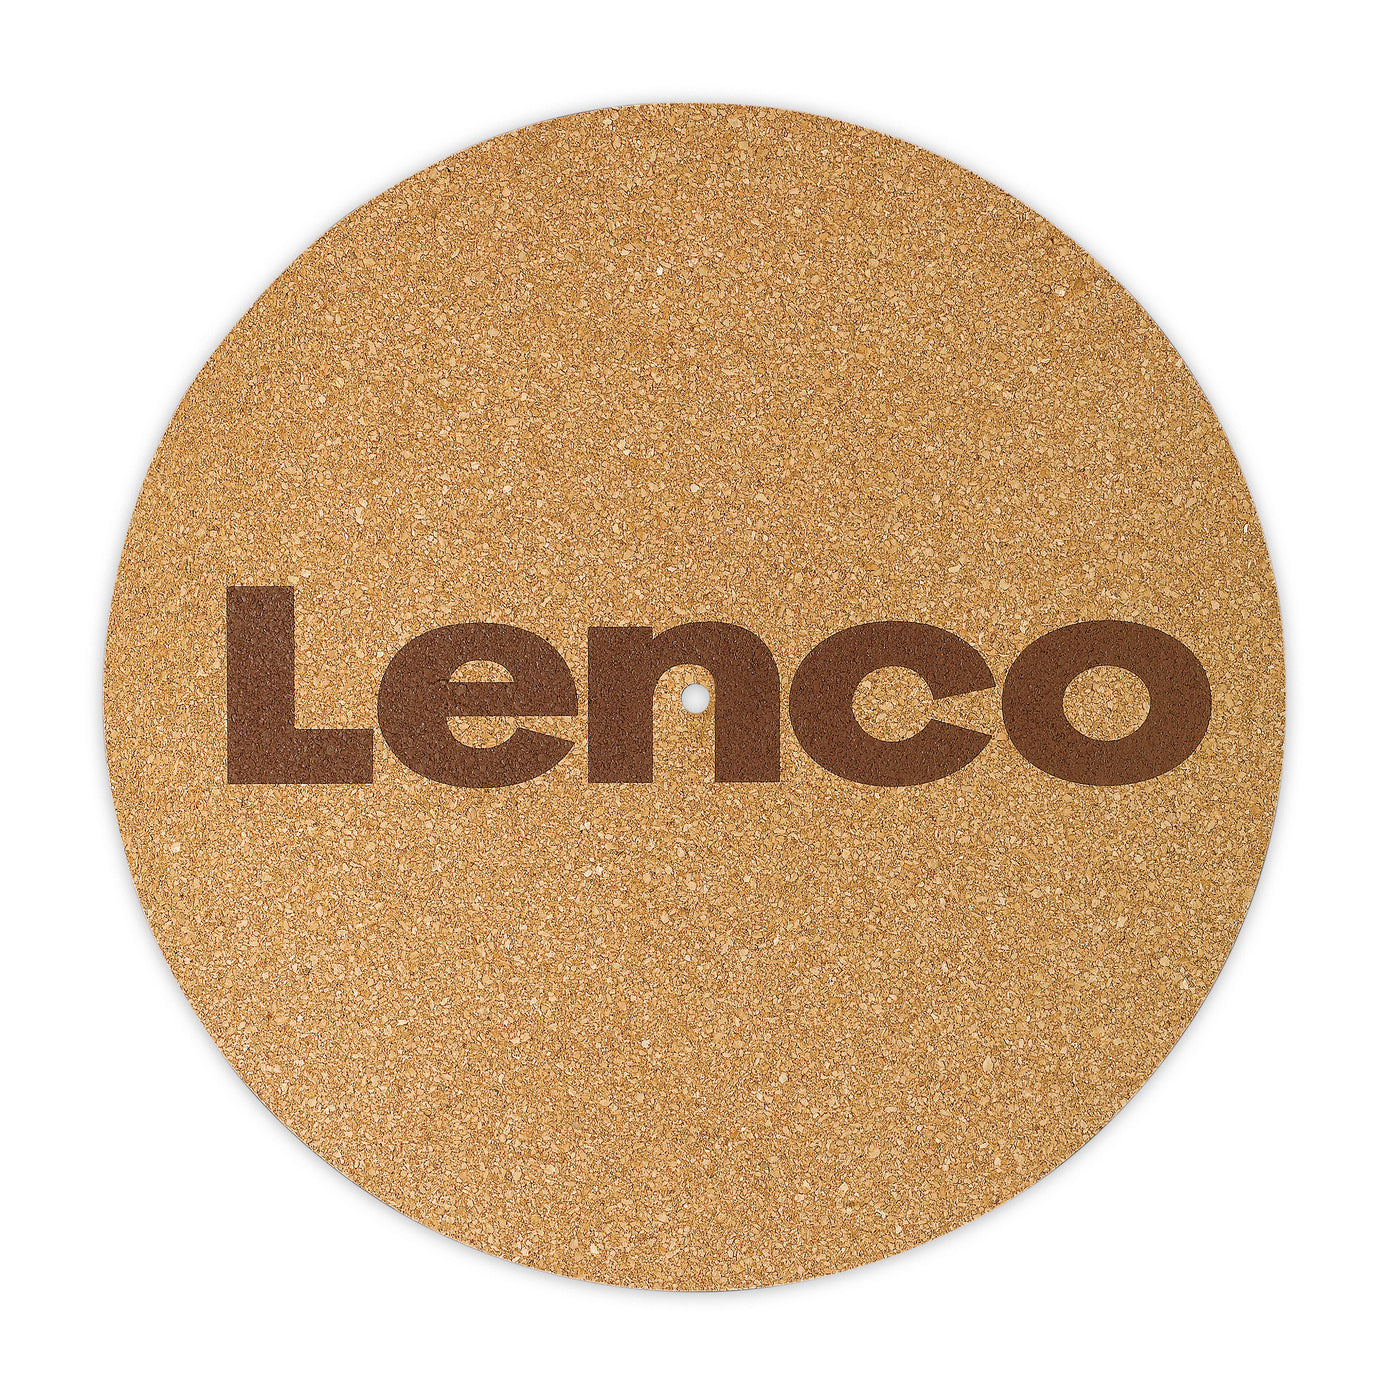 Lenco TTA-030CO - Plattenspieler Slipmat, hergestellt aus Kork